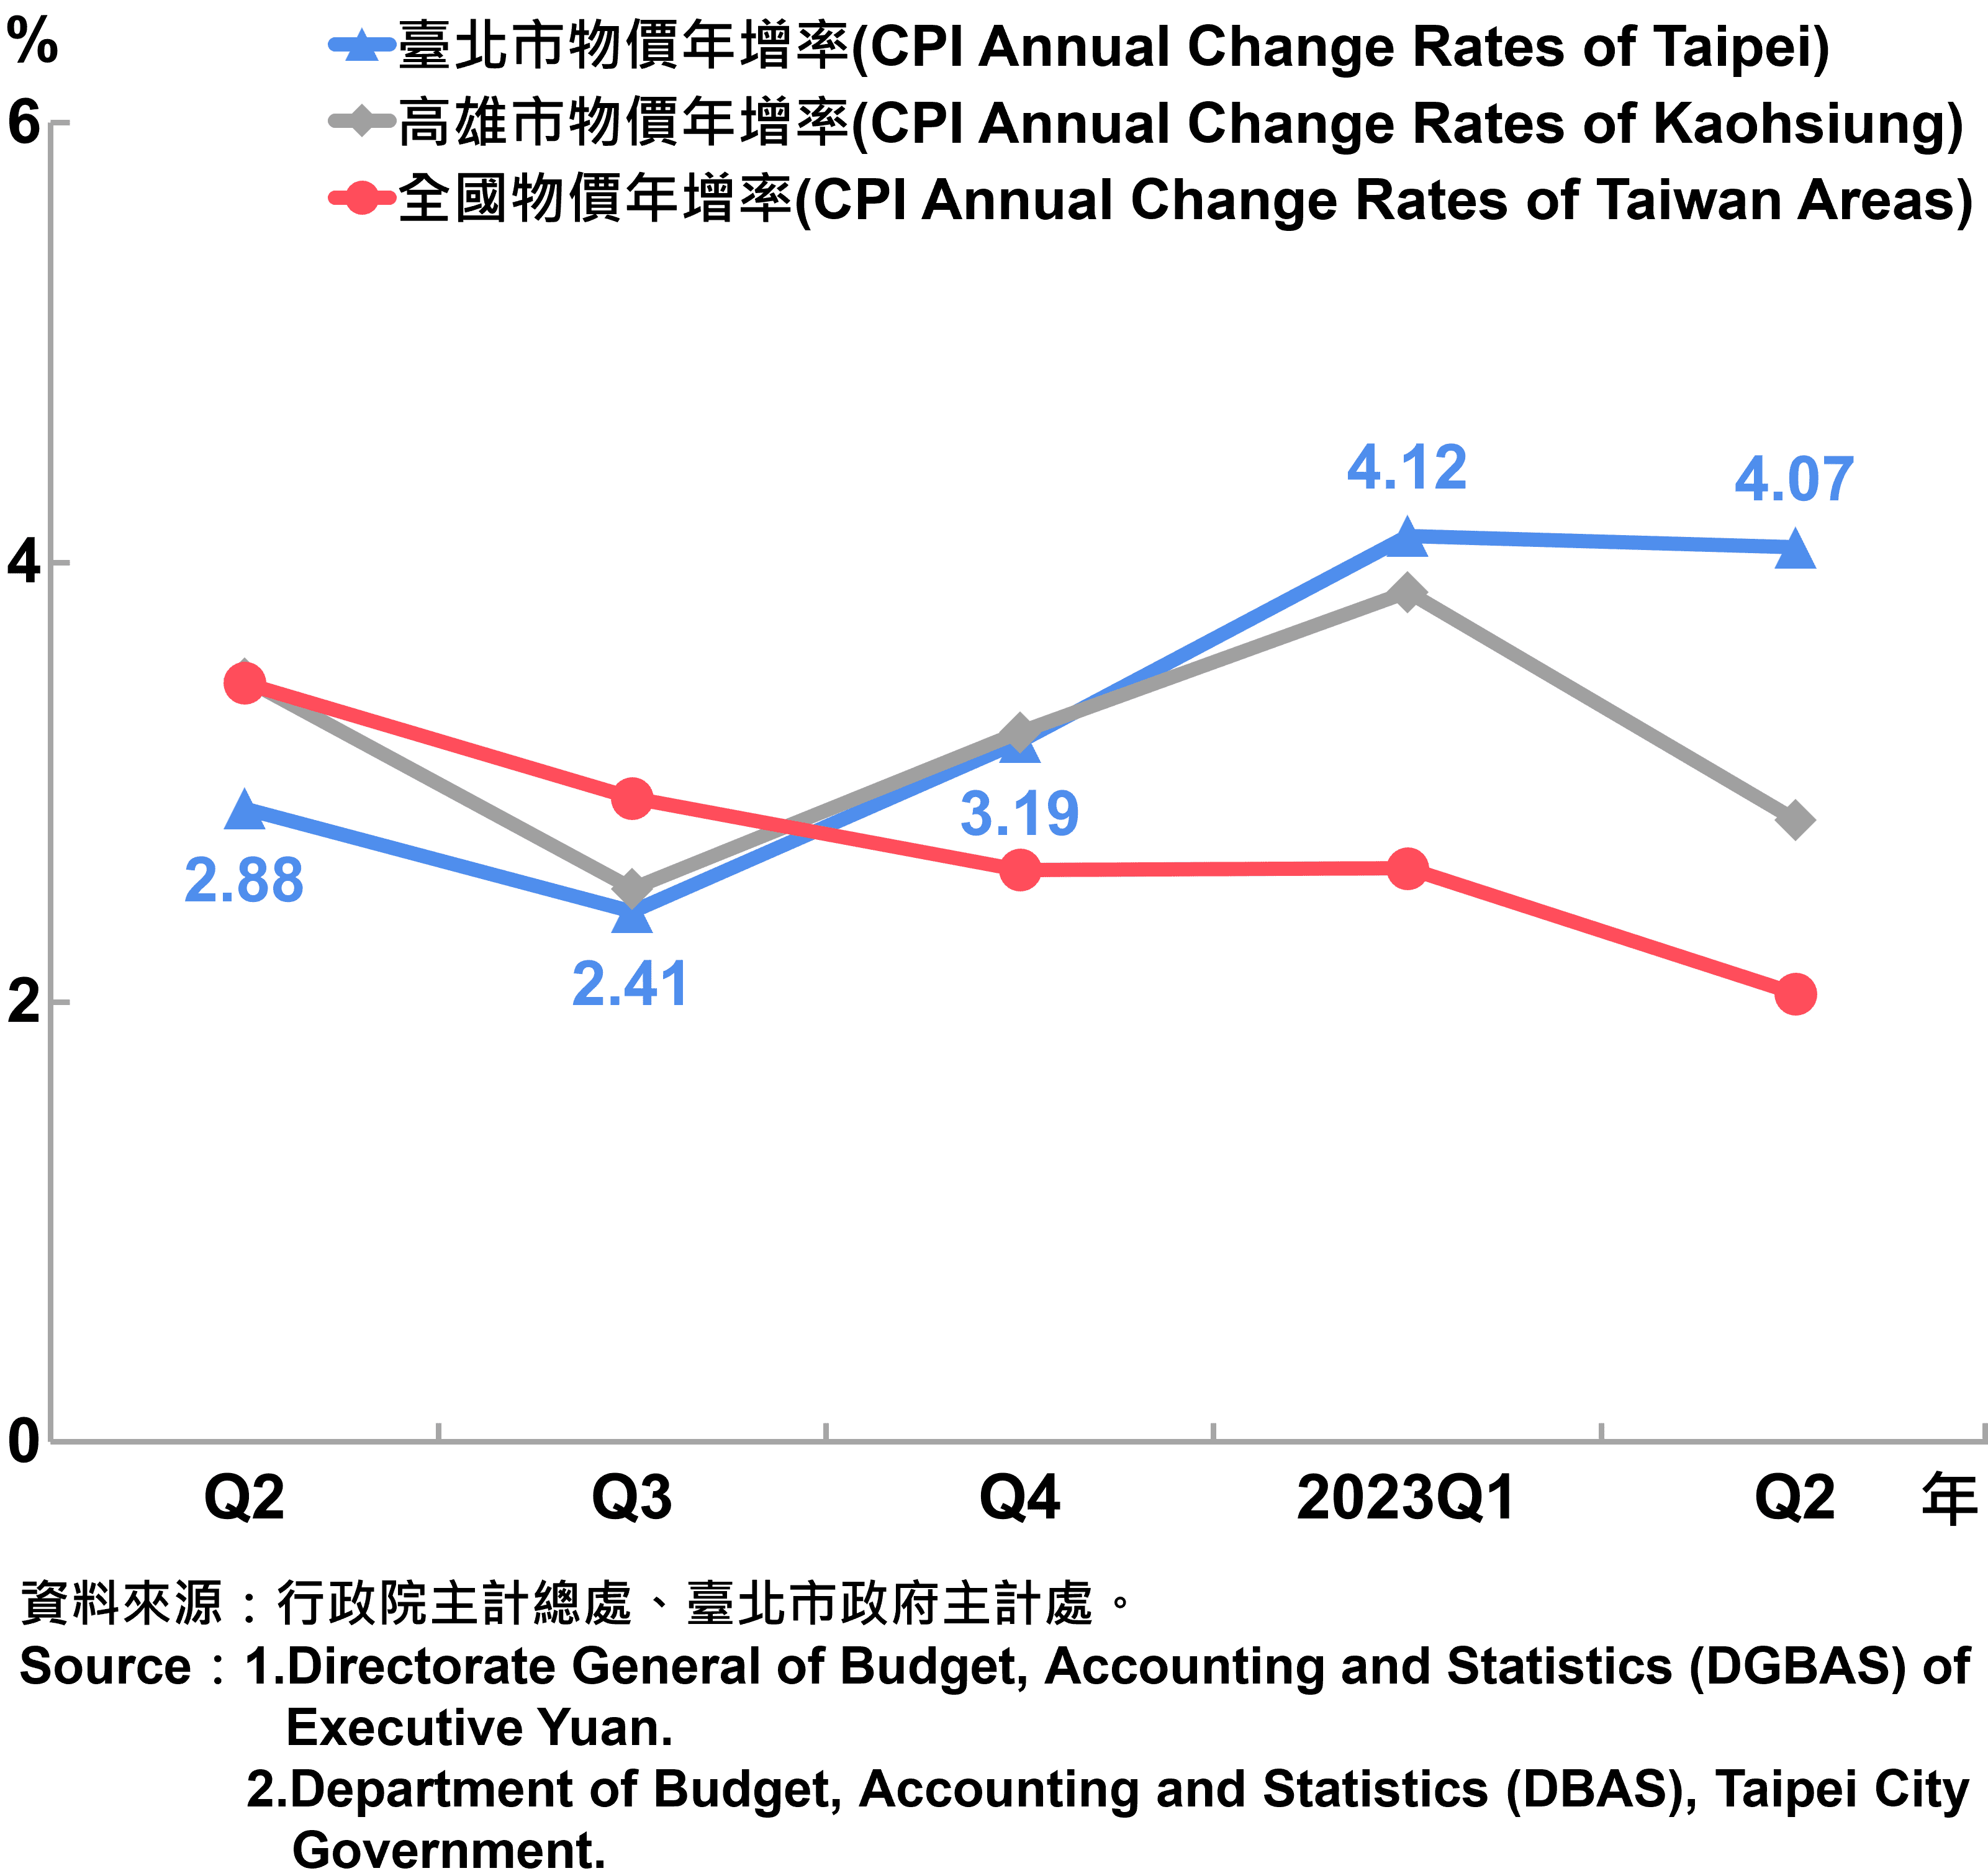 臺北市消費者物價指數（CPI）年增率—2023Q2 Annual Growth Rate of CPI in Taipei City—2023Q2